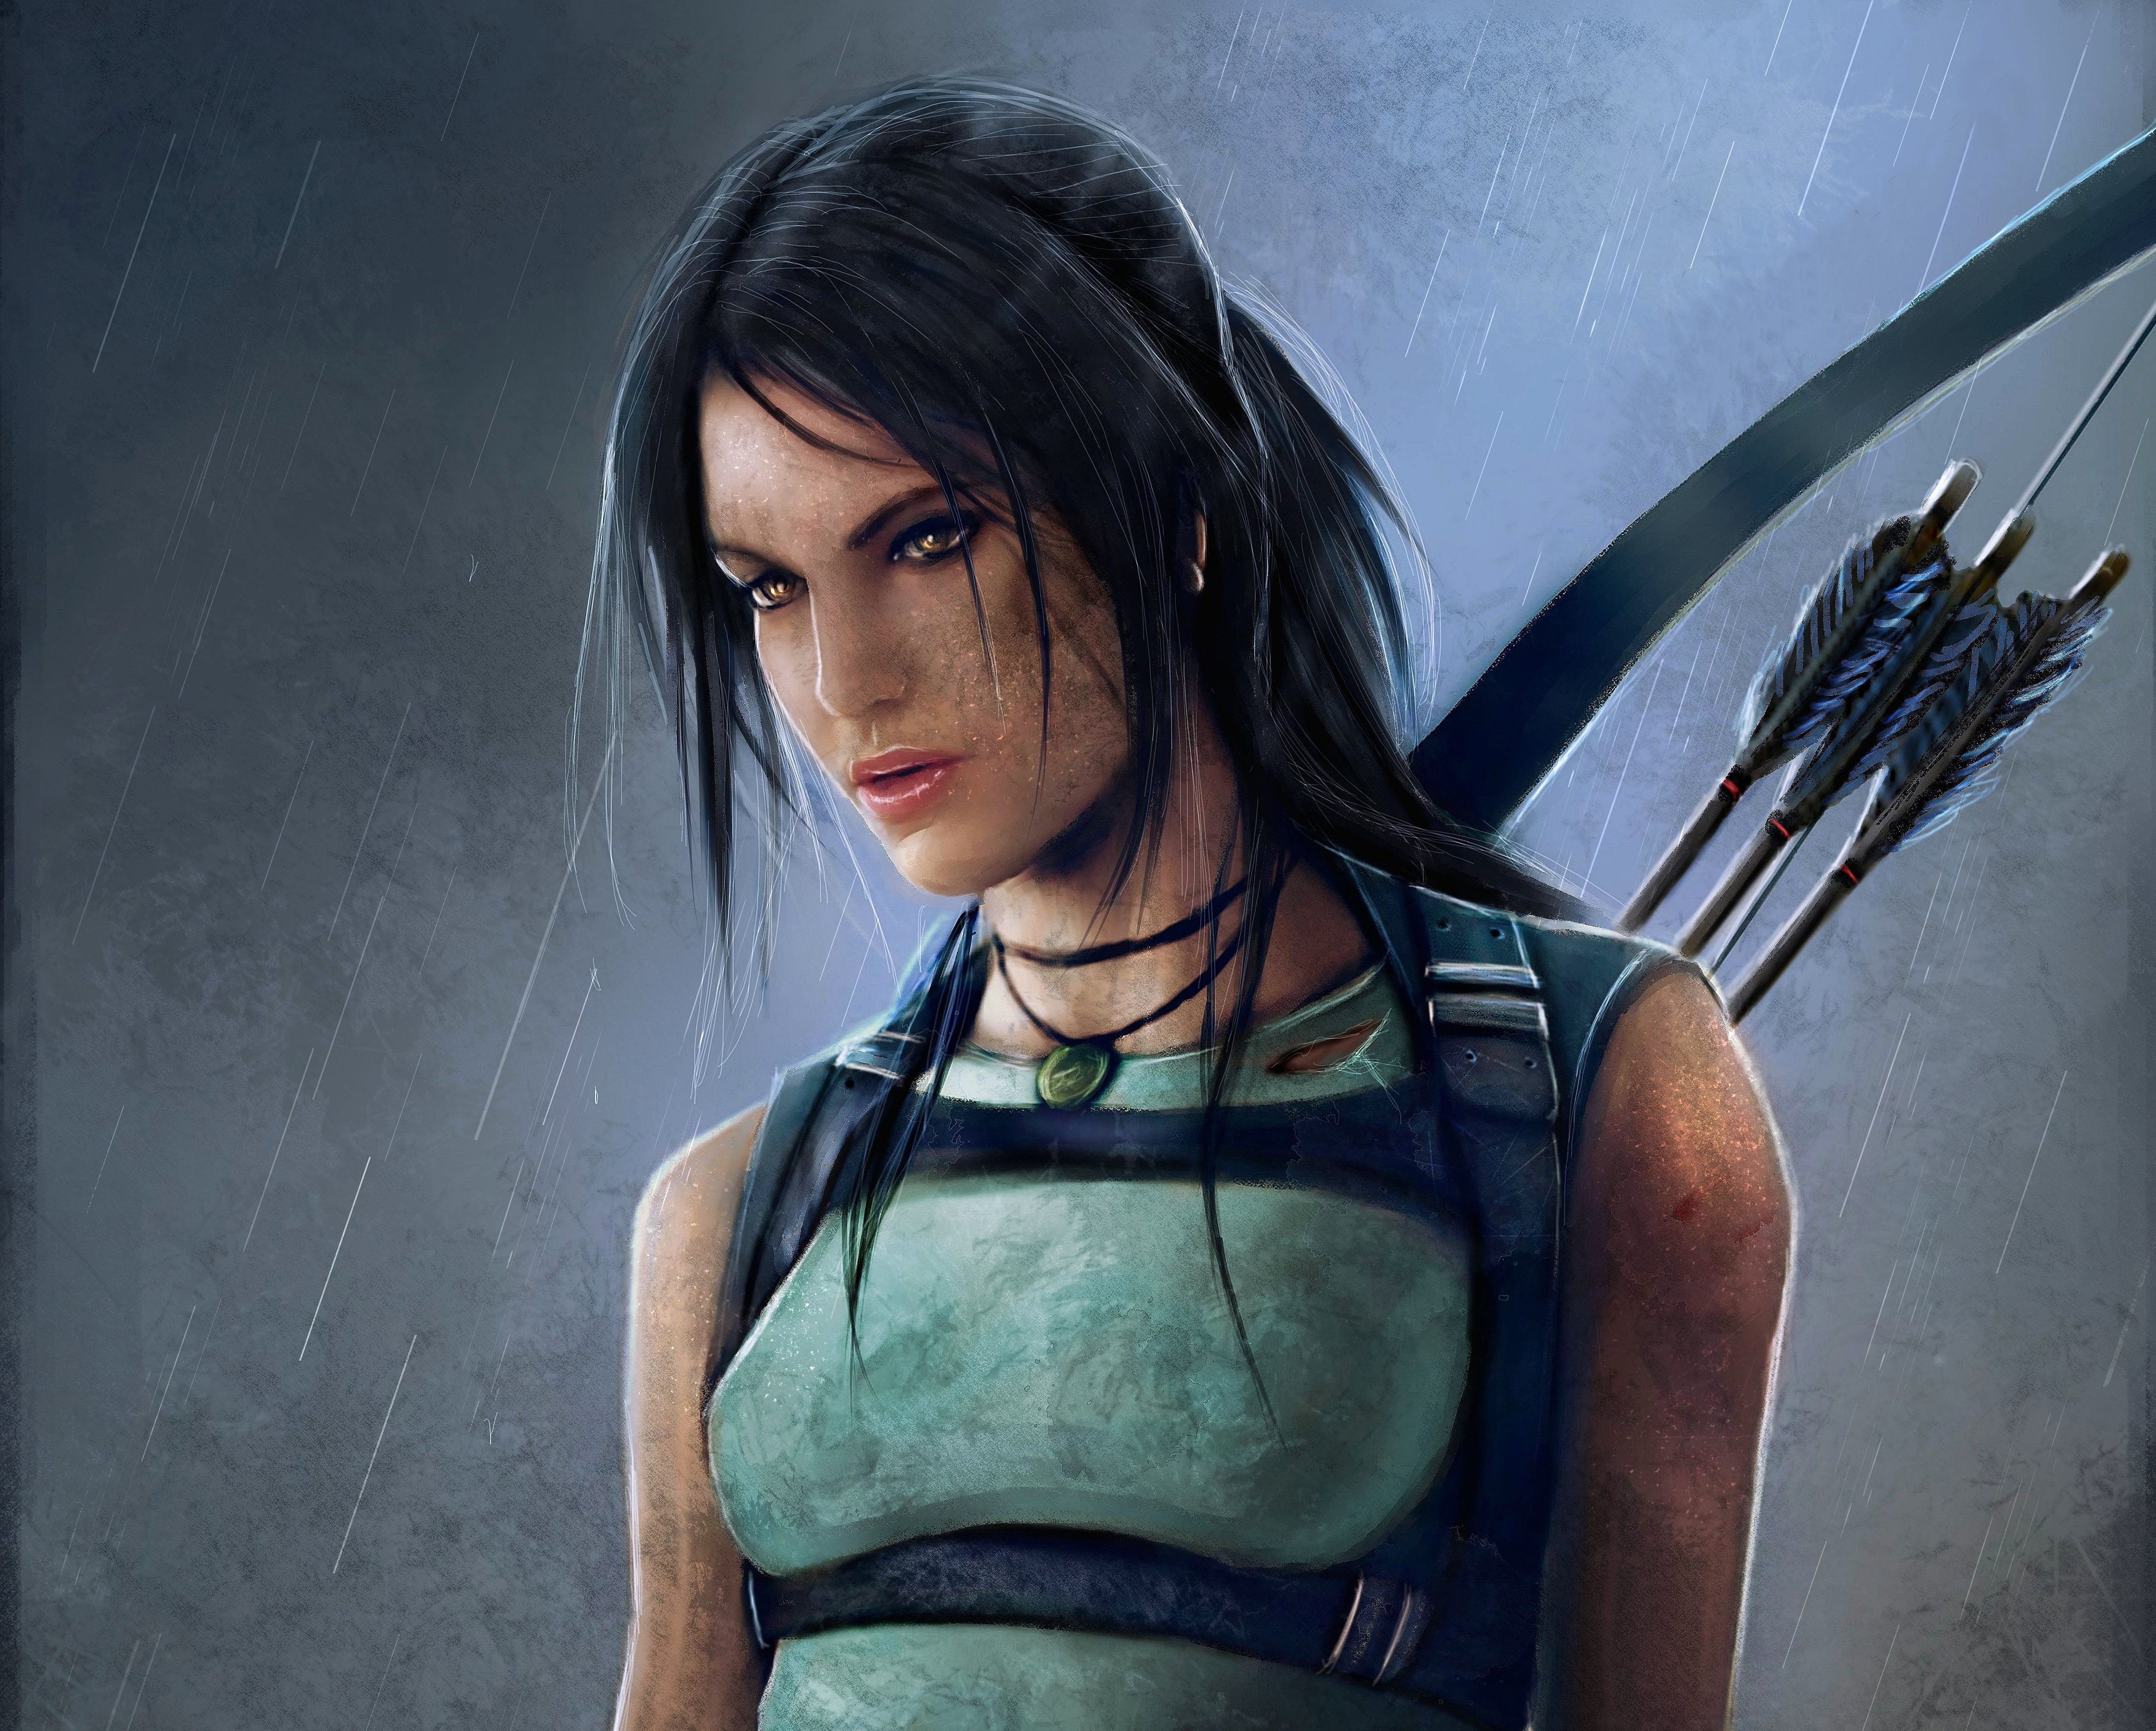 Lara croft rise of the tomb raider 4K wallpaper download